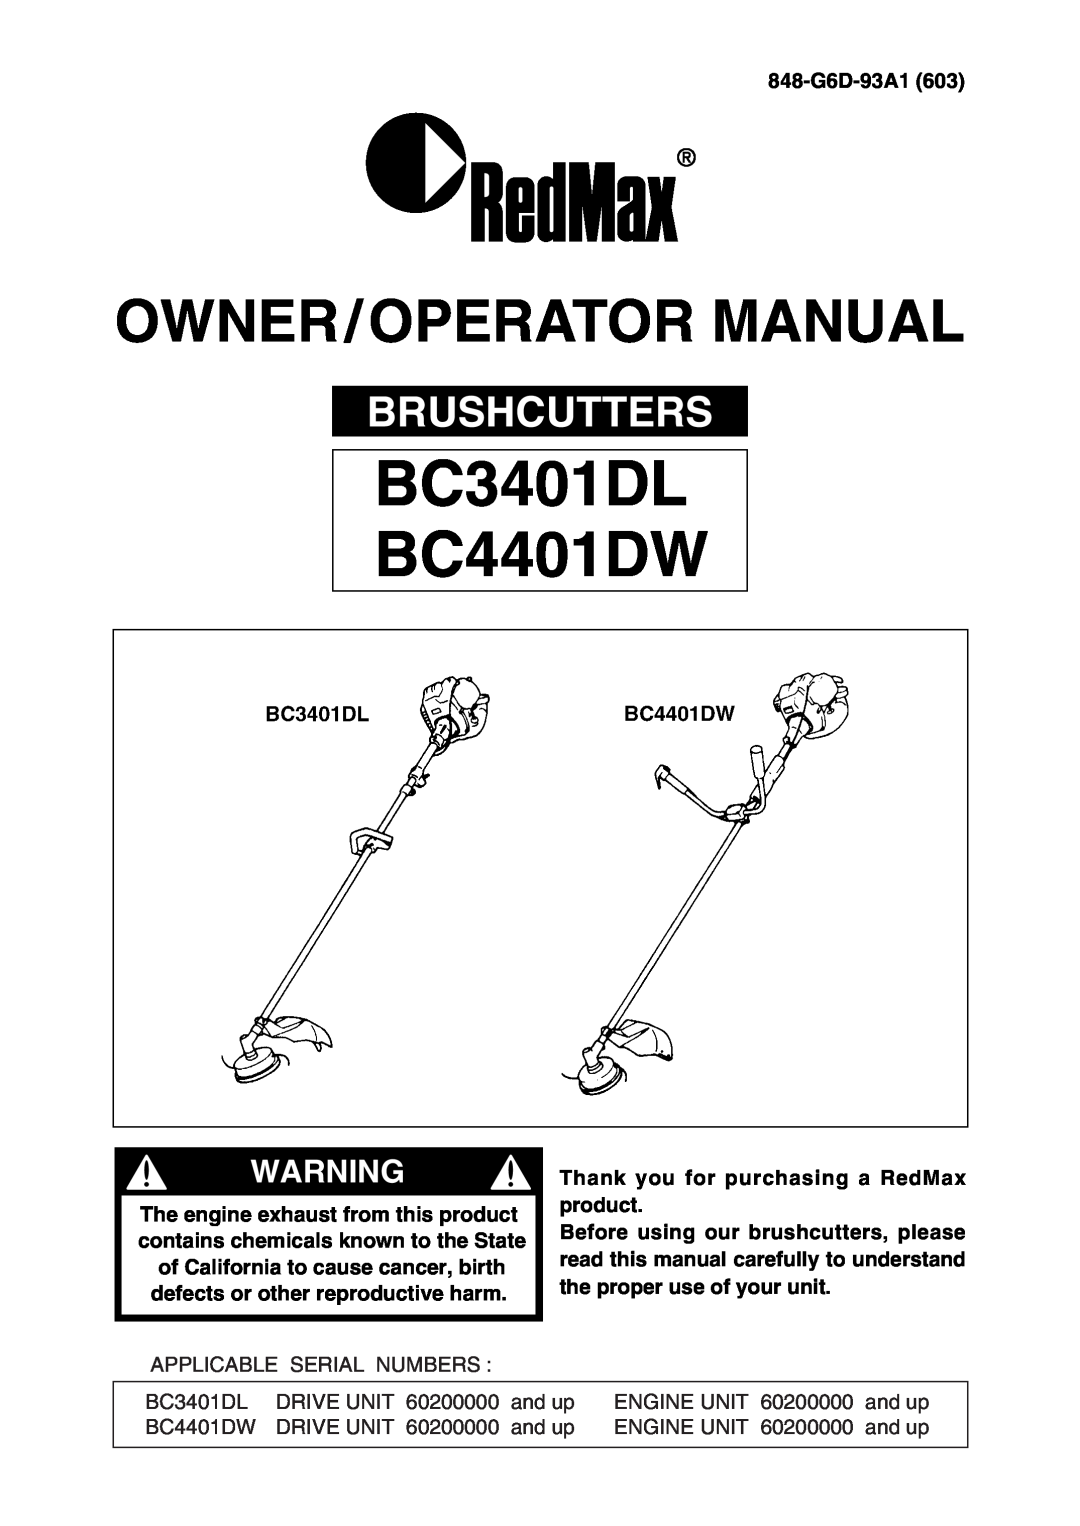 Zenoah manual BC3401DL BC4401DW, Brushcutters, Owner/Operator Manual 